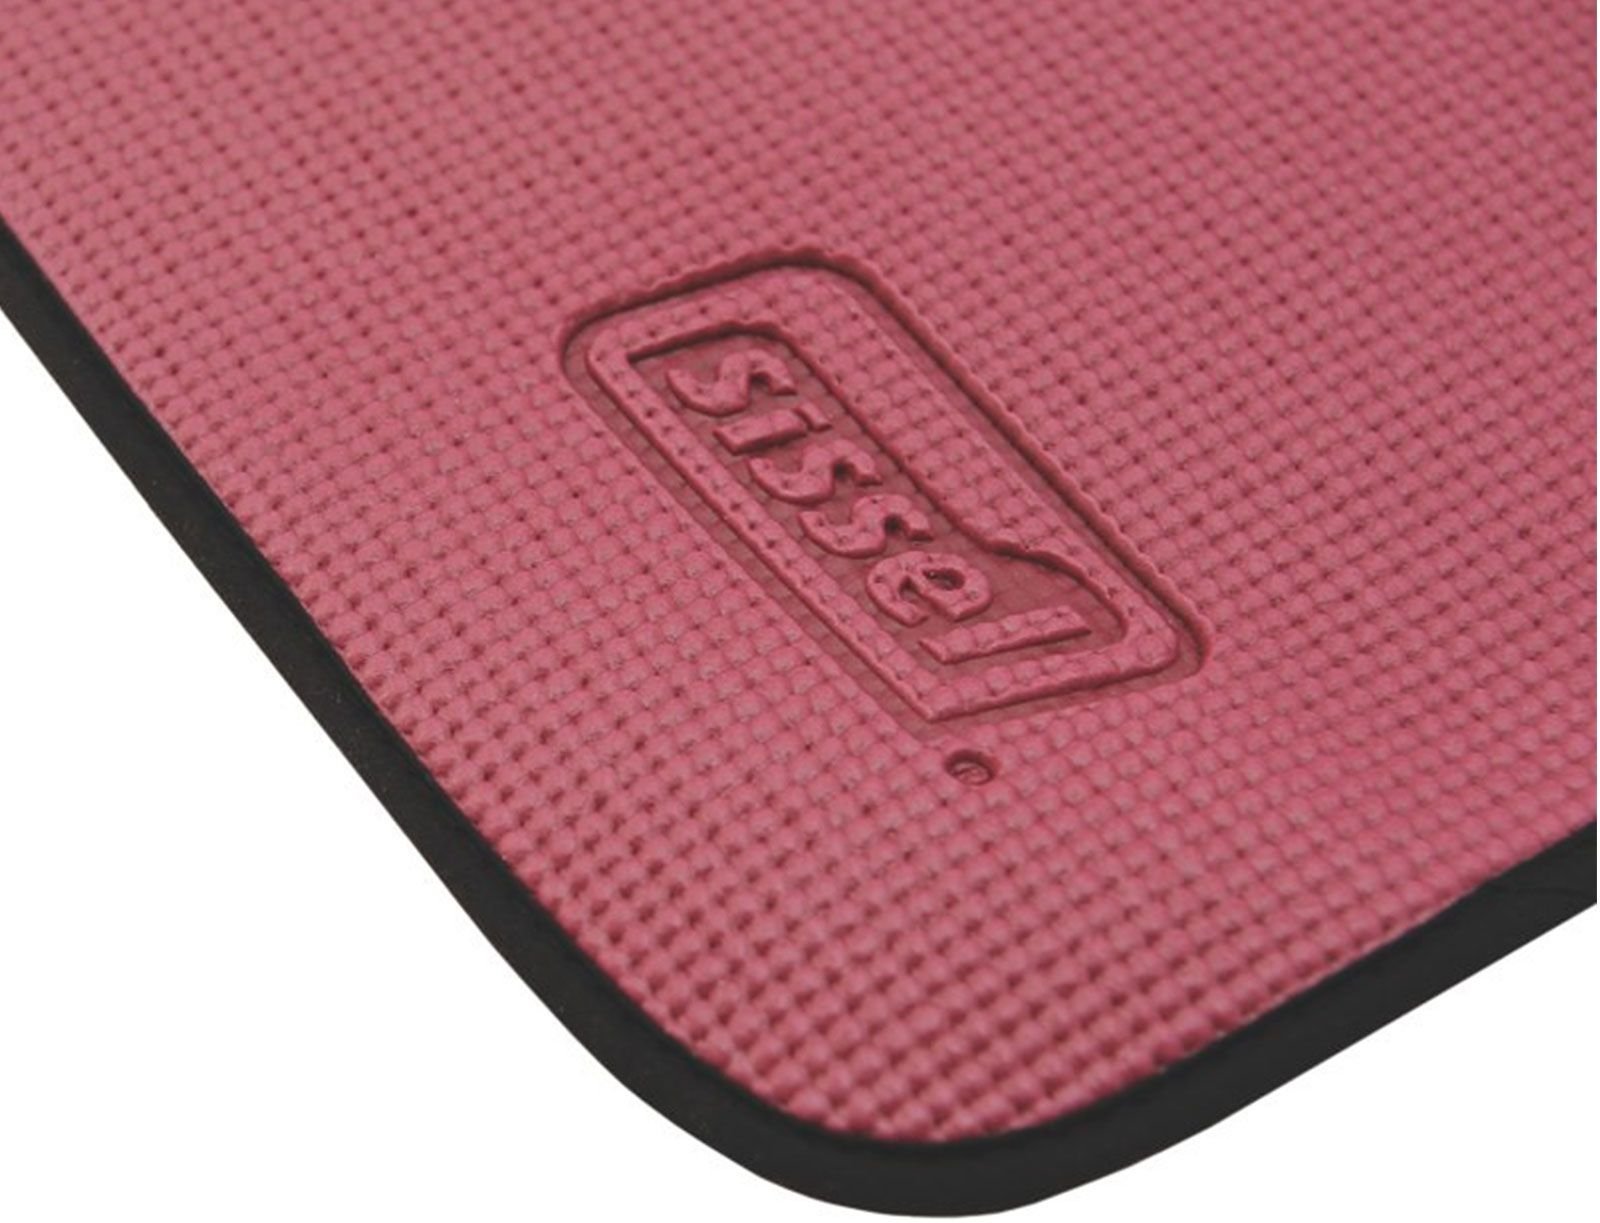 Sissel Pilates mat detail